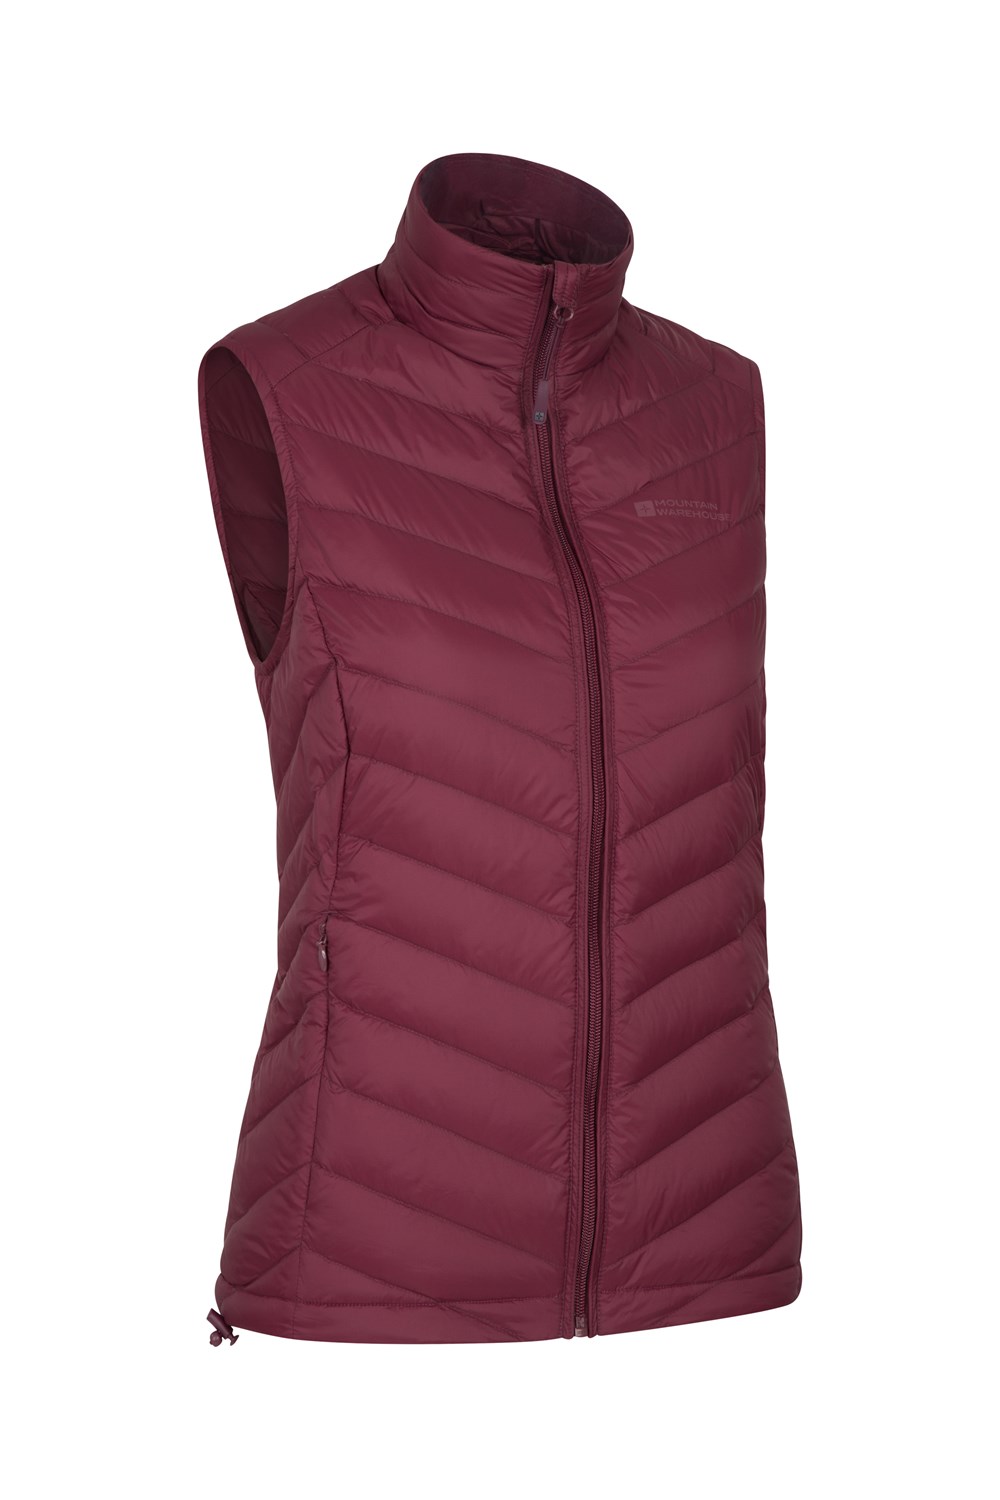 Mountain Warehouse Womens Down Gilet Lightweight Water-Resistant Ladies Vest  | eBay